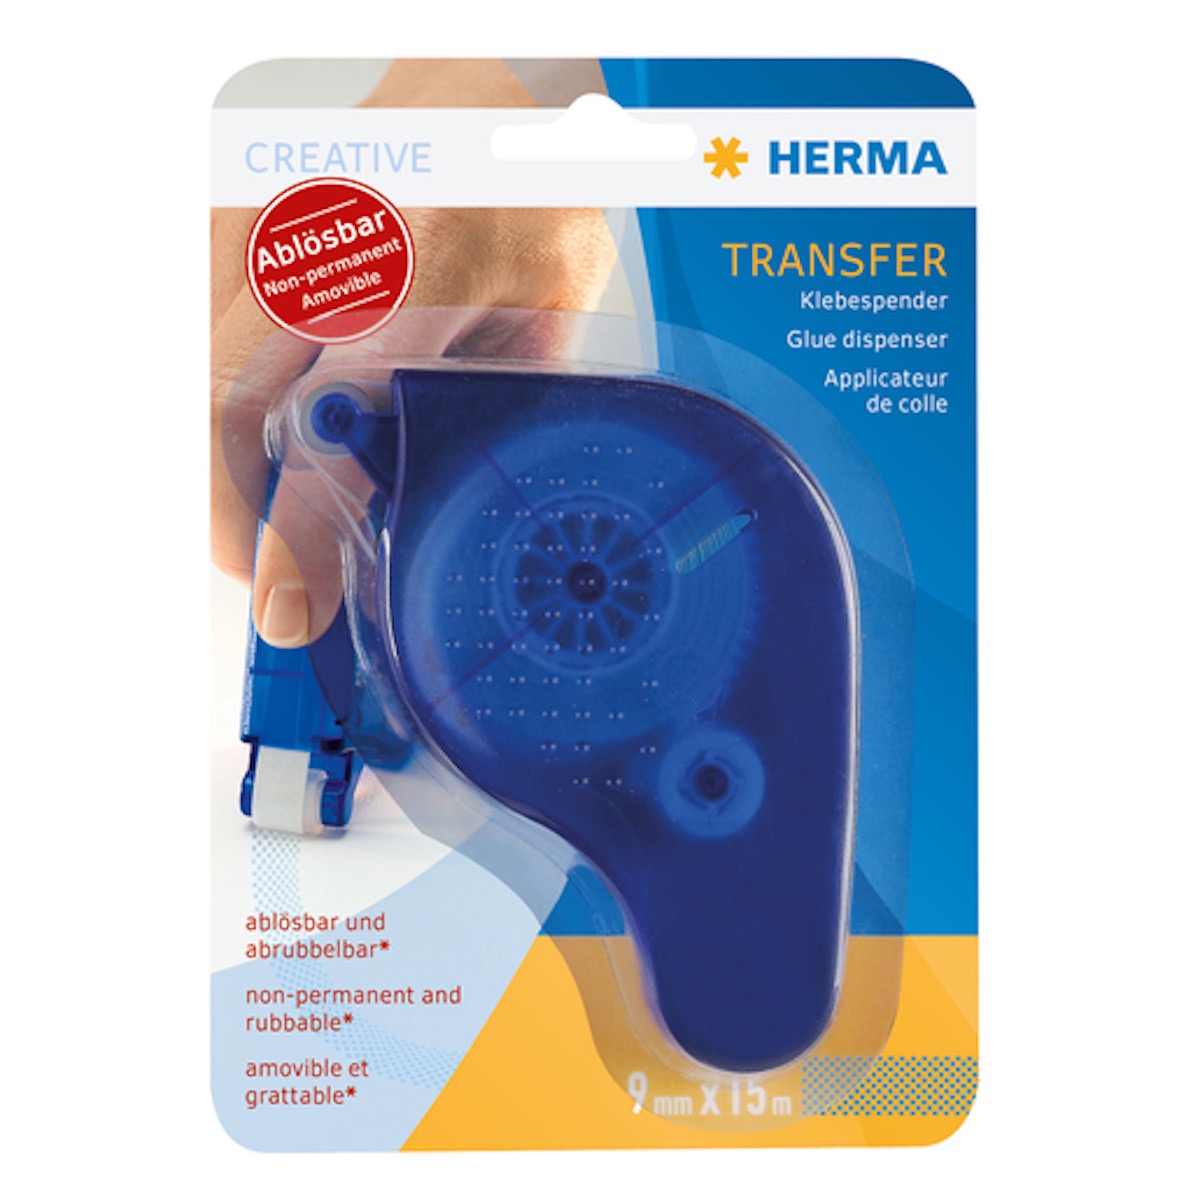 Herma Transferspender blau incl. 15m